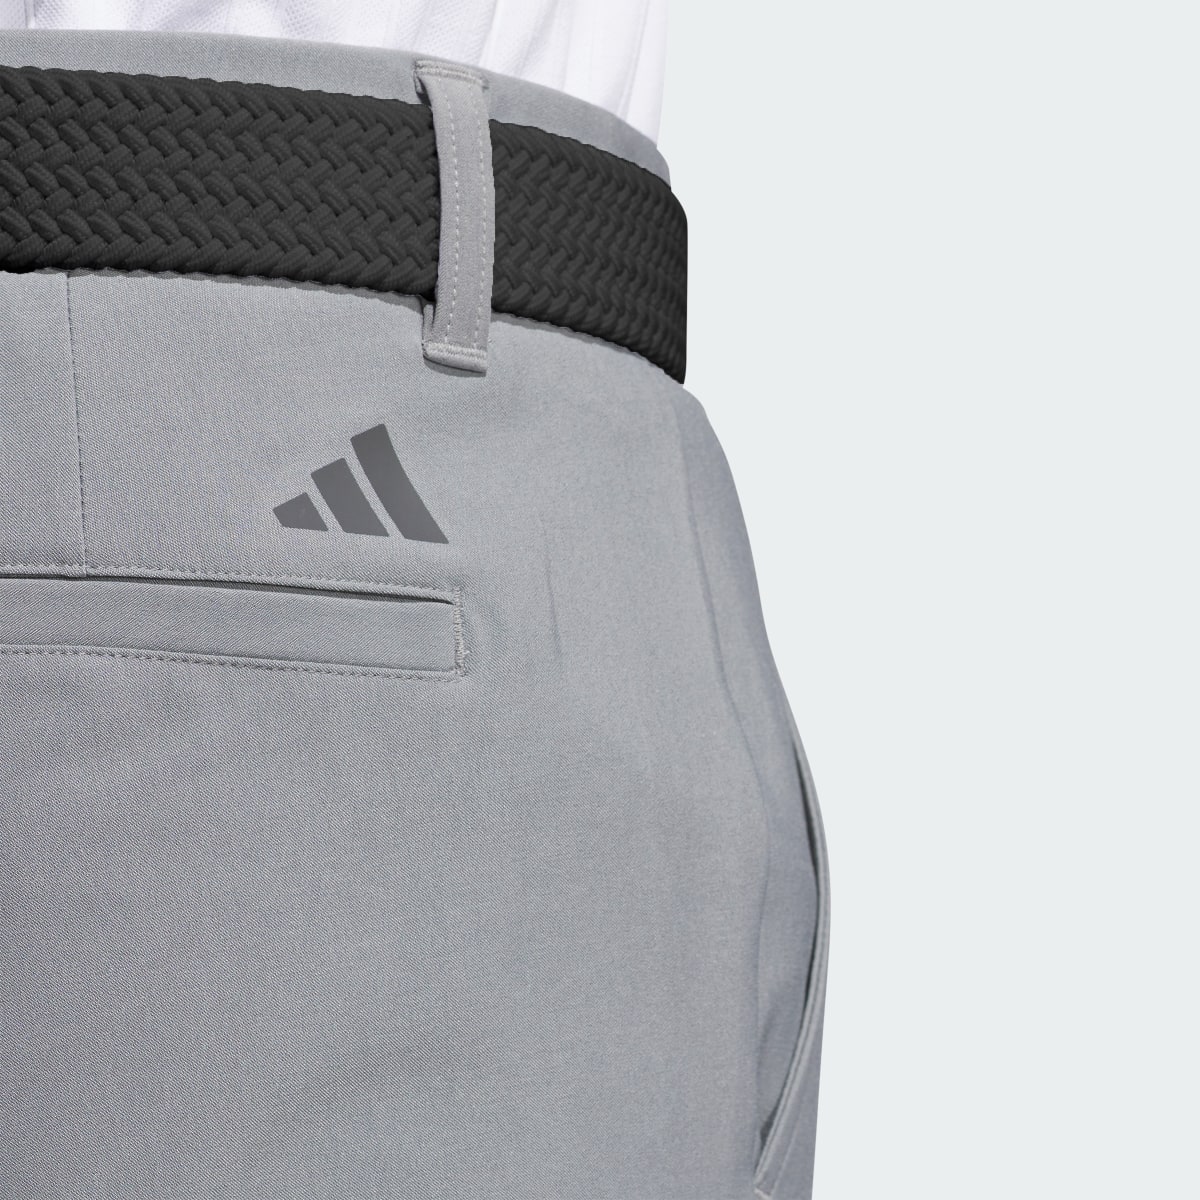 Adidas Ultimate365 Golf Pants. 6